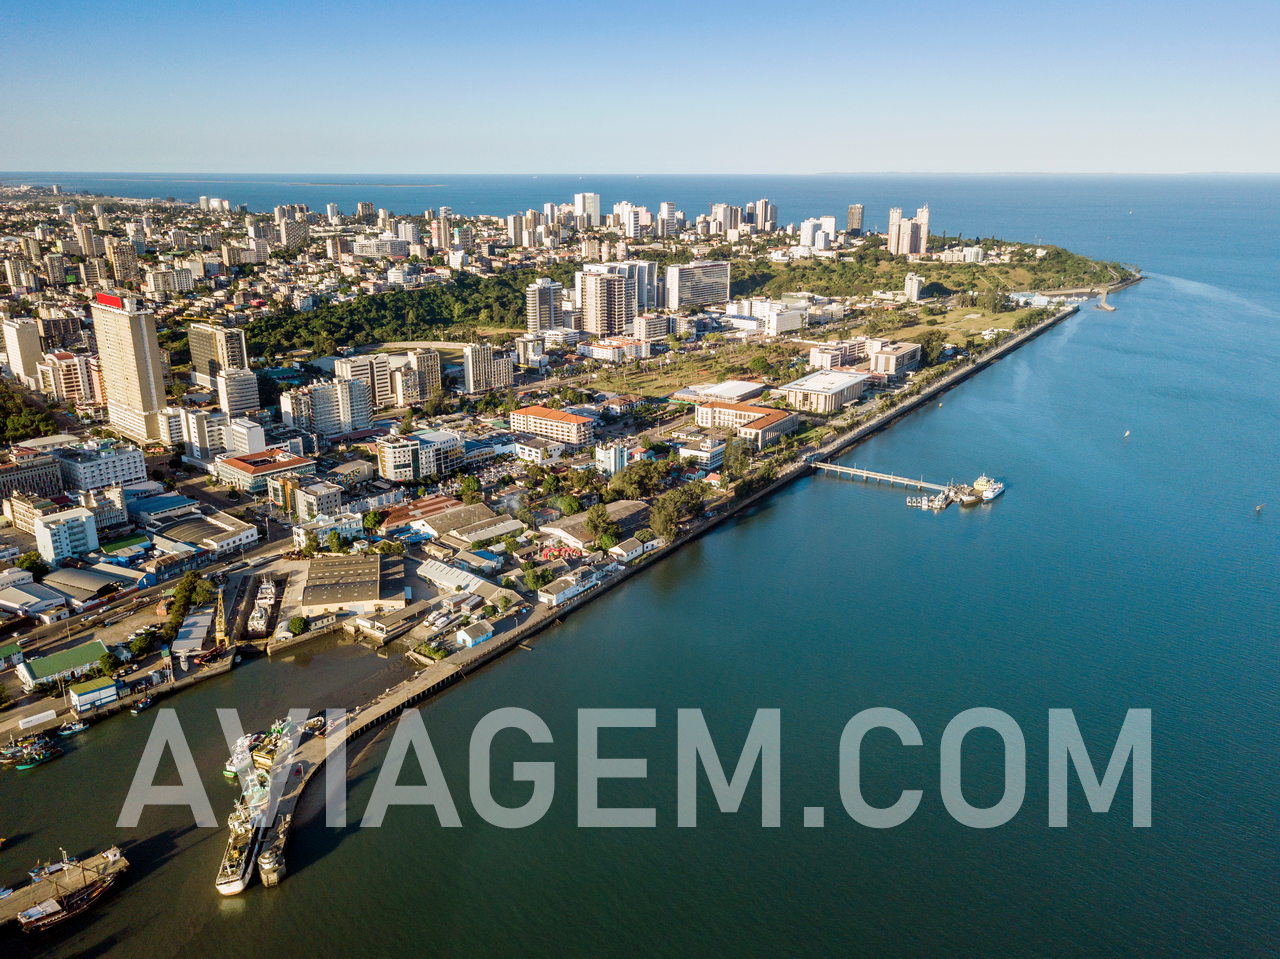 Maputo, capital city of Mozambique